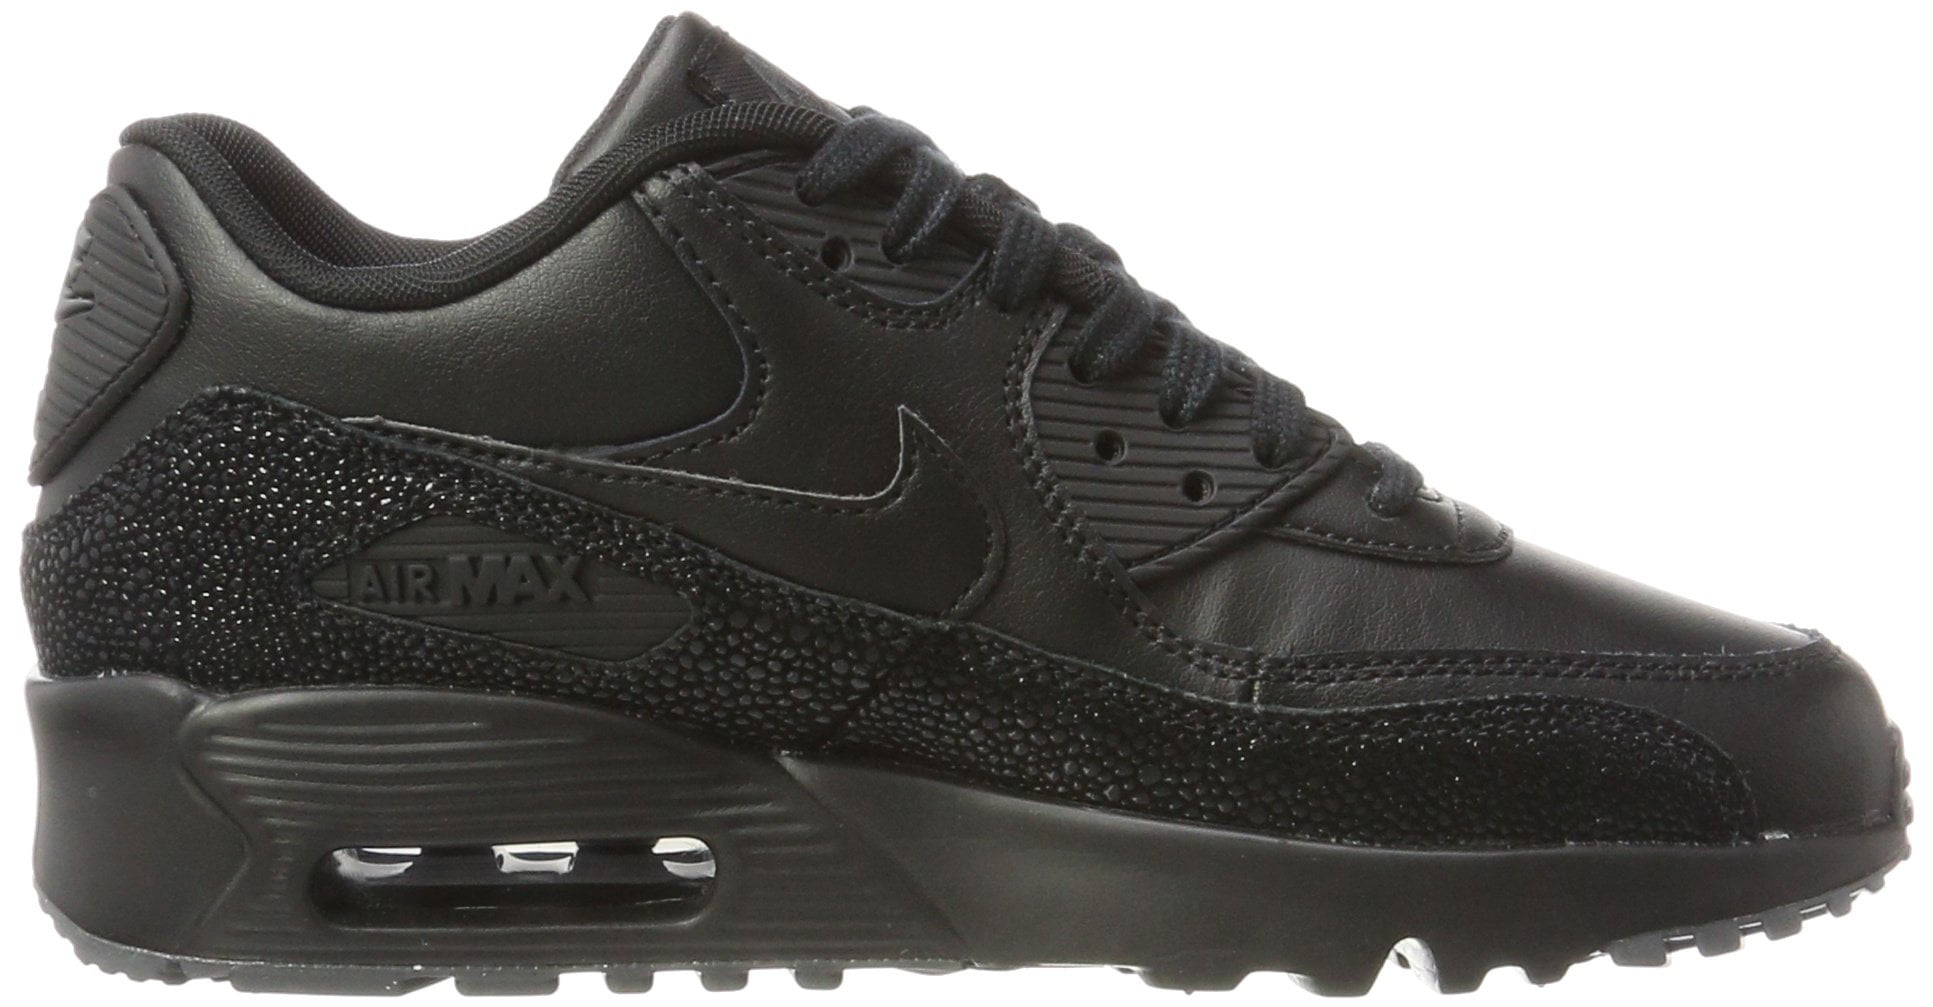 Nike 859560-002 : Air Max 90 SE Leather Big Kids Shoe Black Grey (5 M US Big Kid)